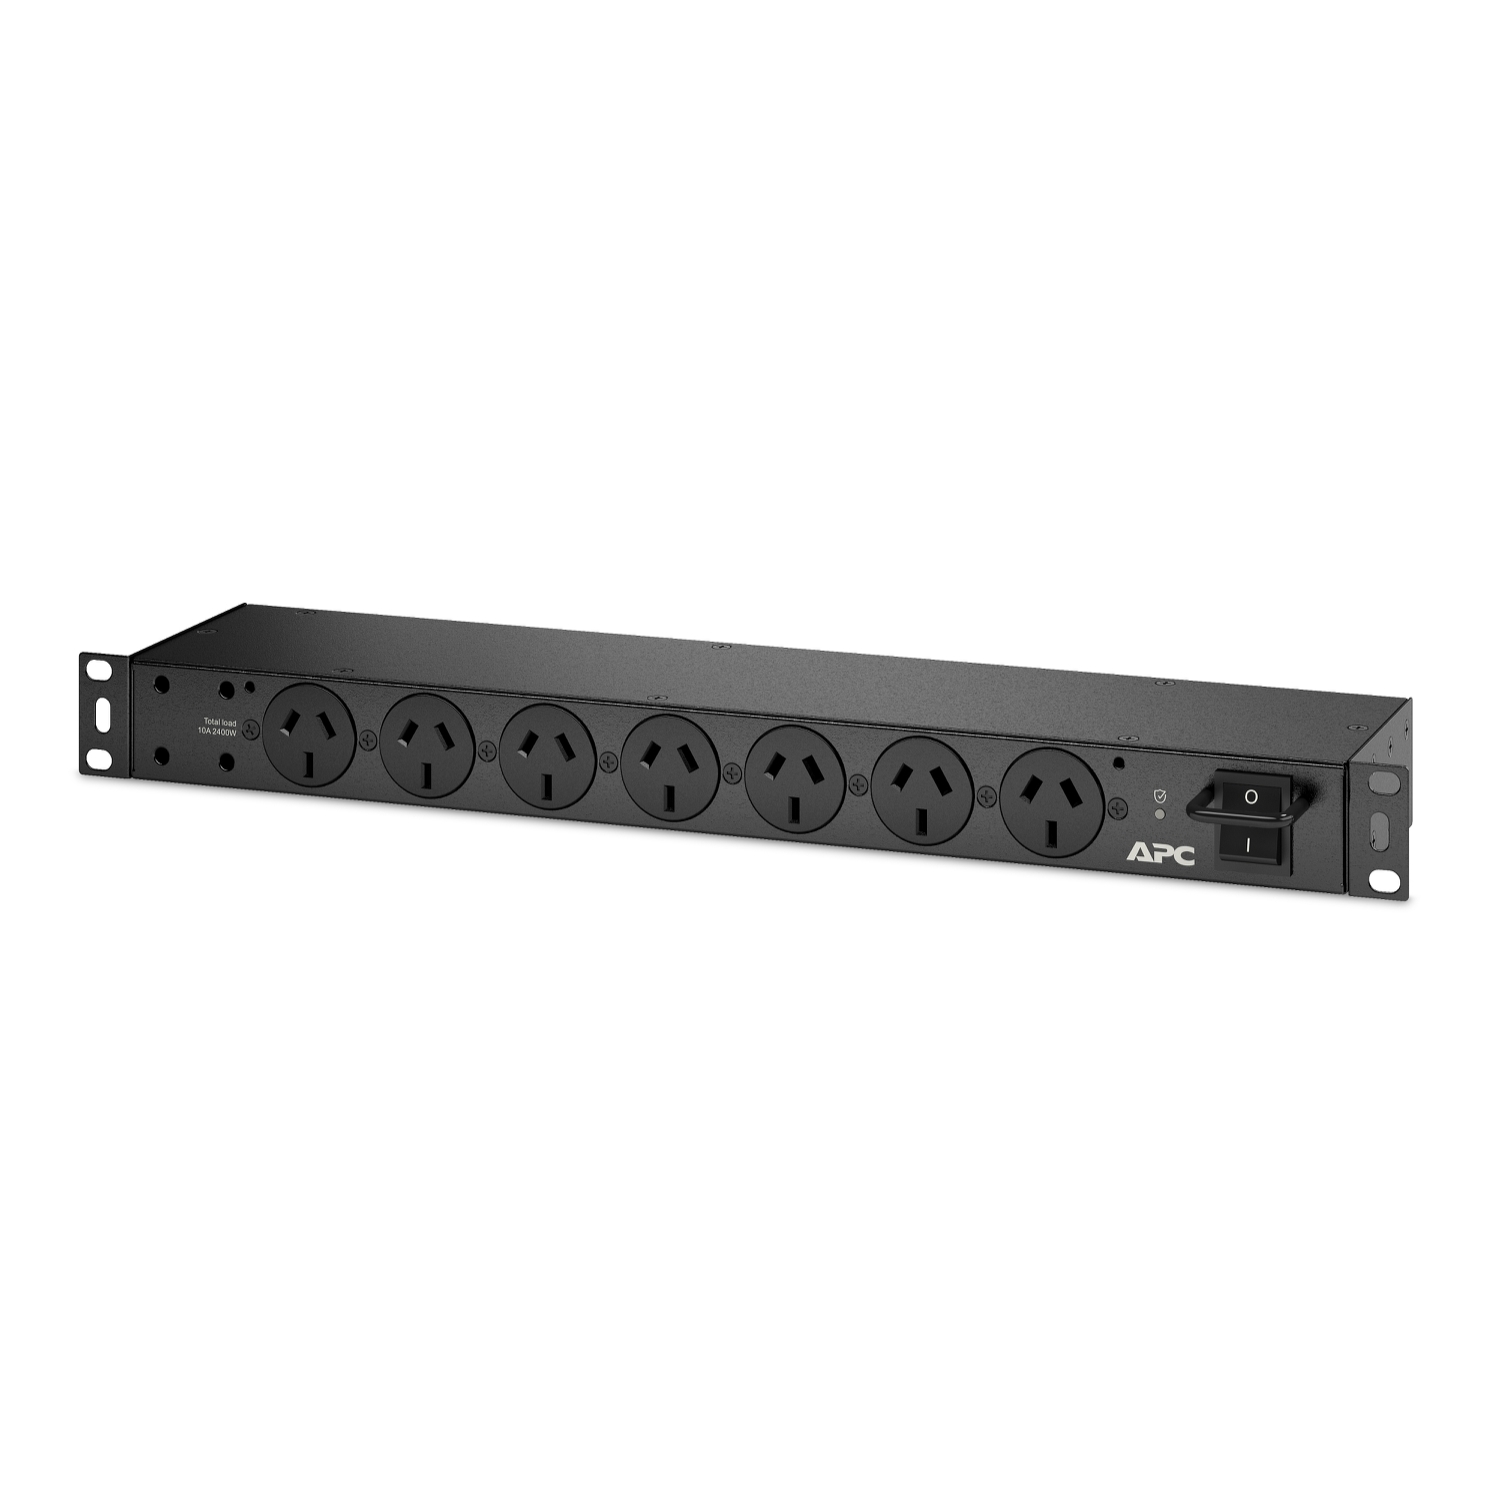 APC SurgeArrest Performance Rack PDU/Power Board, 1U, 230V/11A Input, 7x Aus Outlets